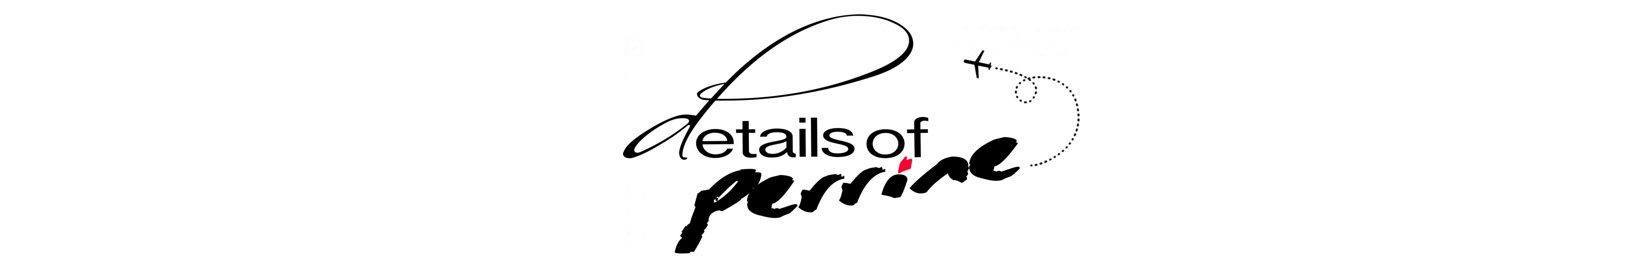 Details Of Perrine | Blog voyage et lifestyle pour vous inspirer !